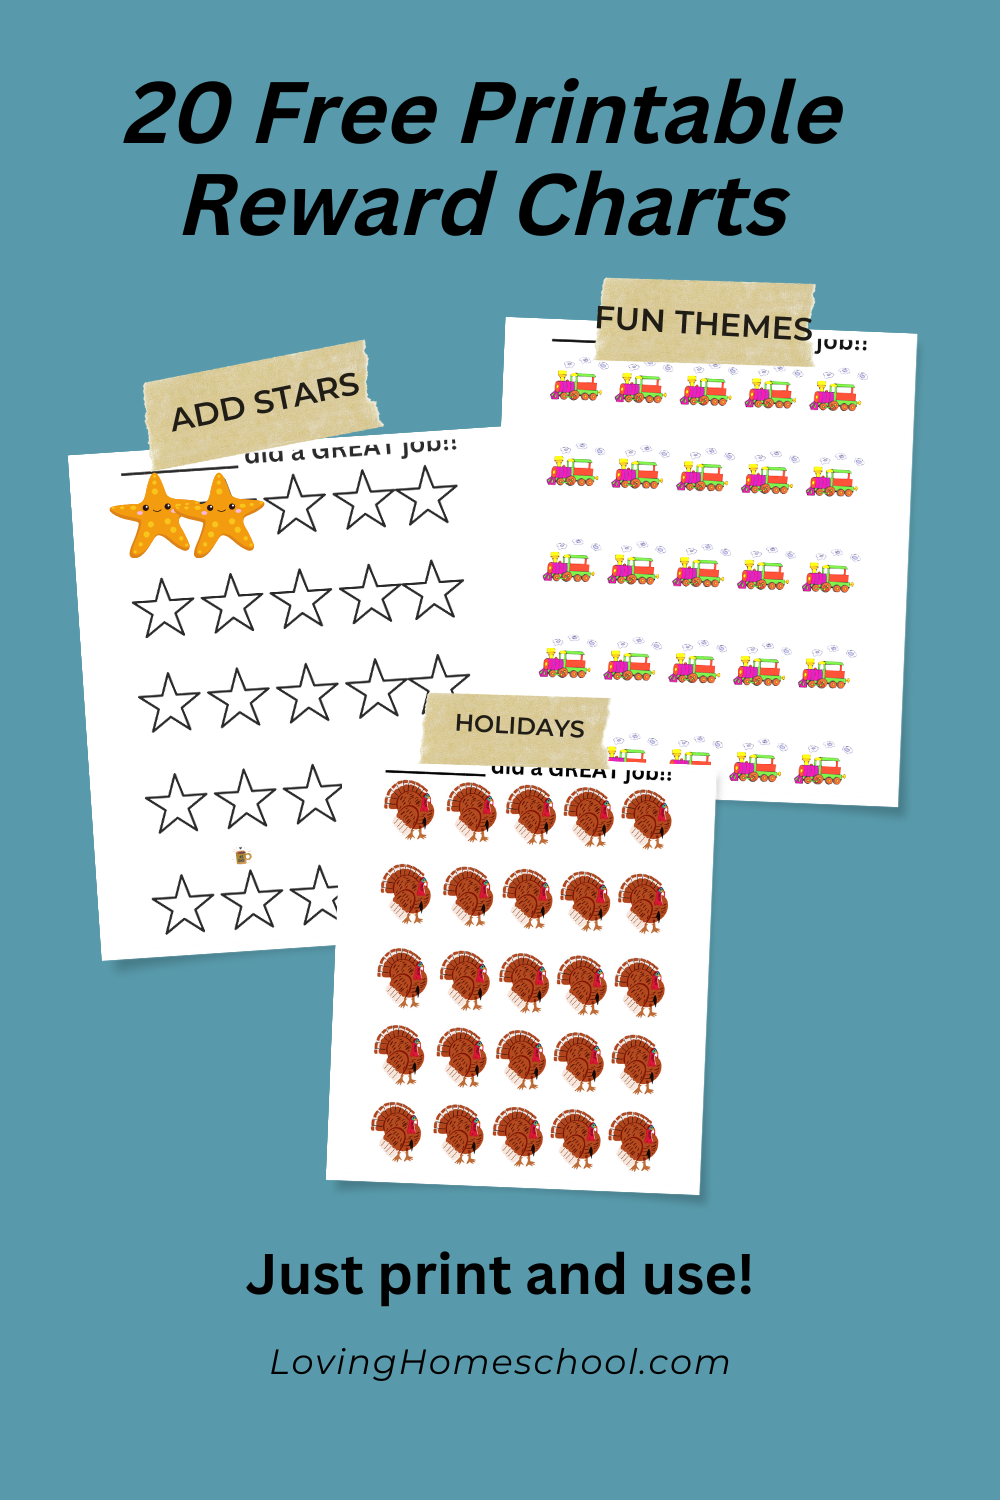 20 Free Printable Reward Charts Pinterest Pin